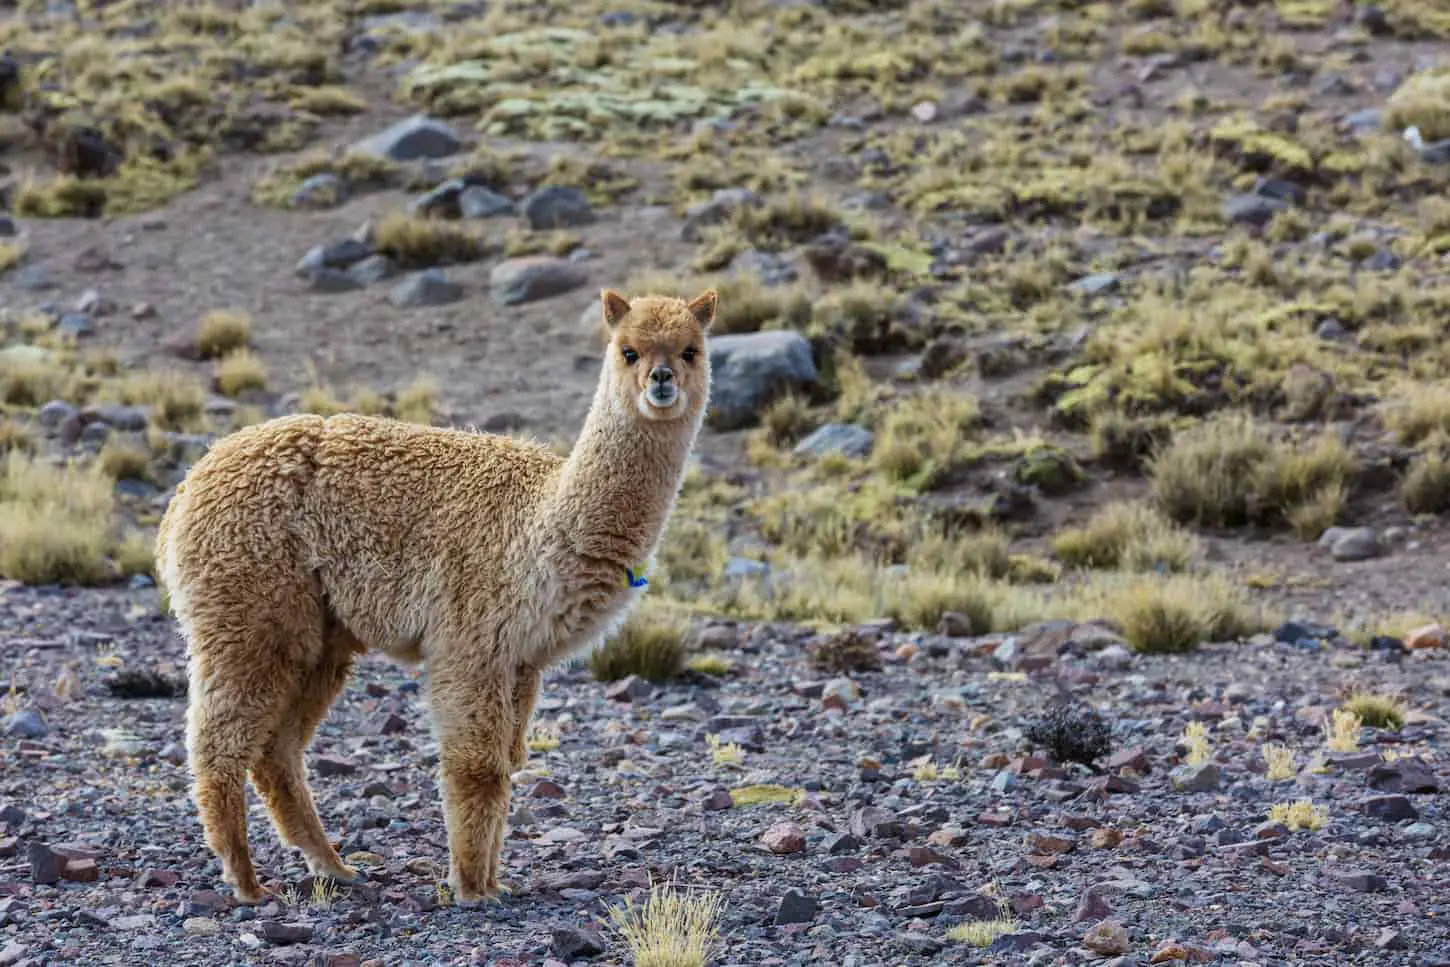 An image of an alpaca looking through the camera.